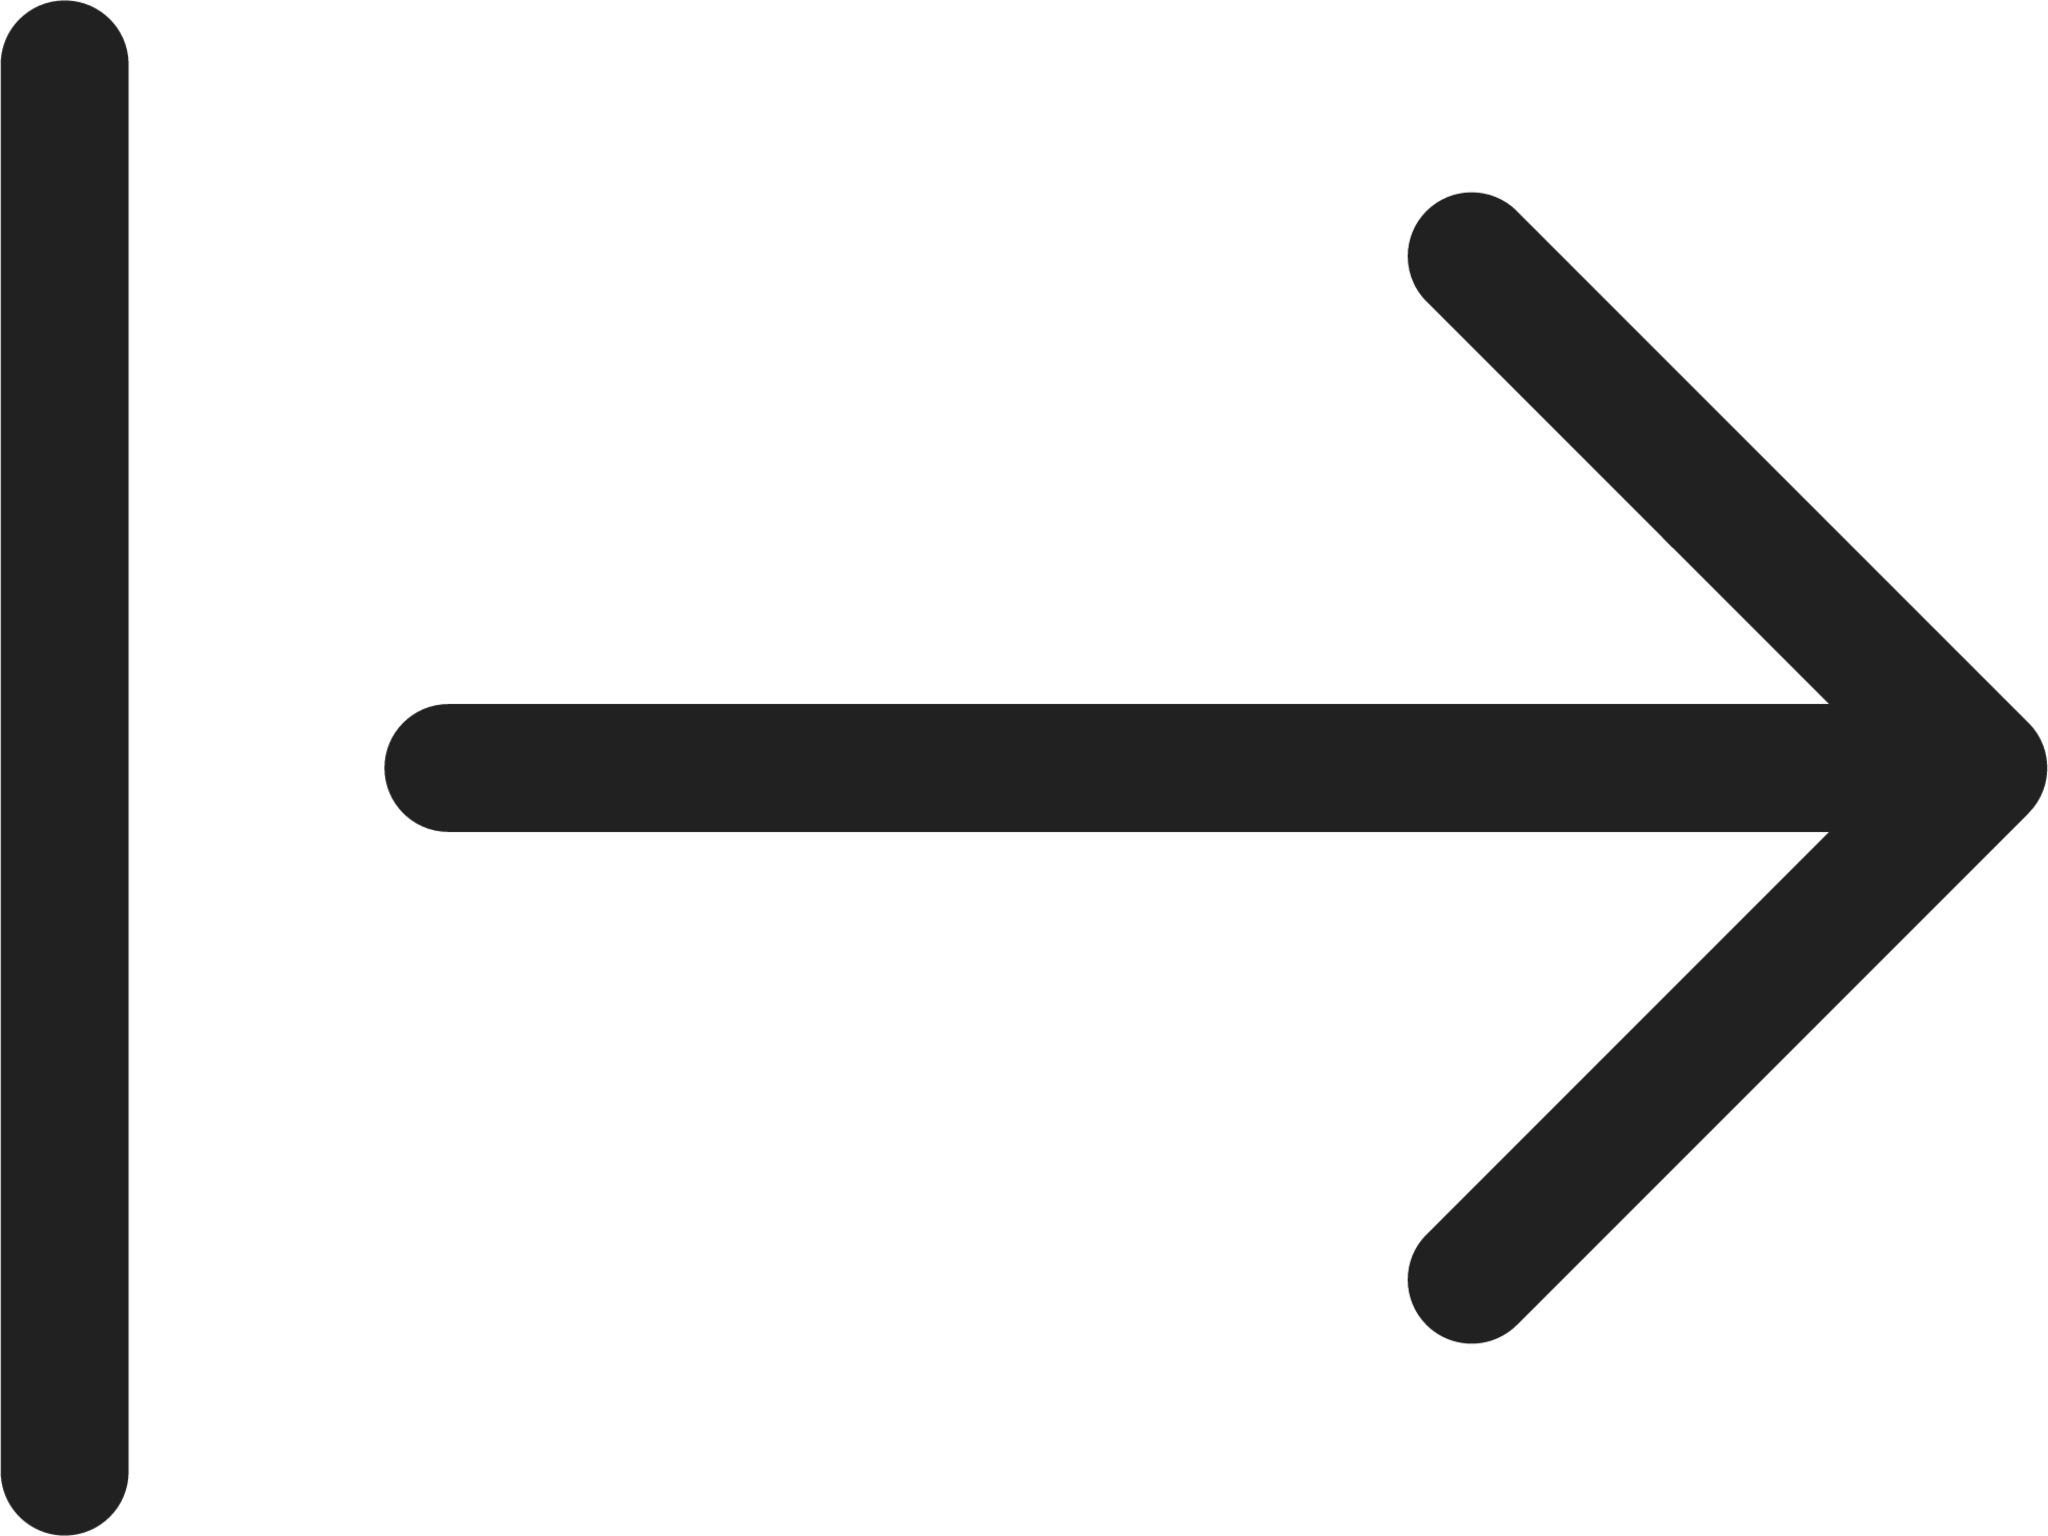 Arrow Export icon